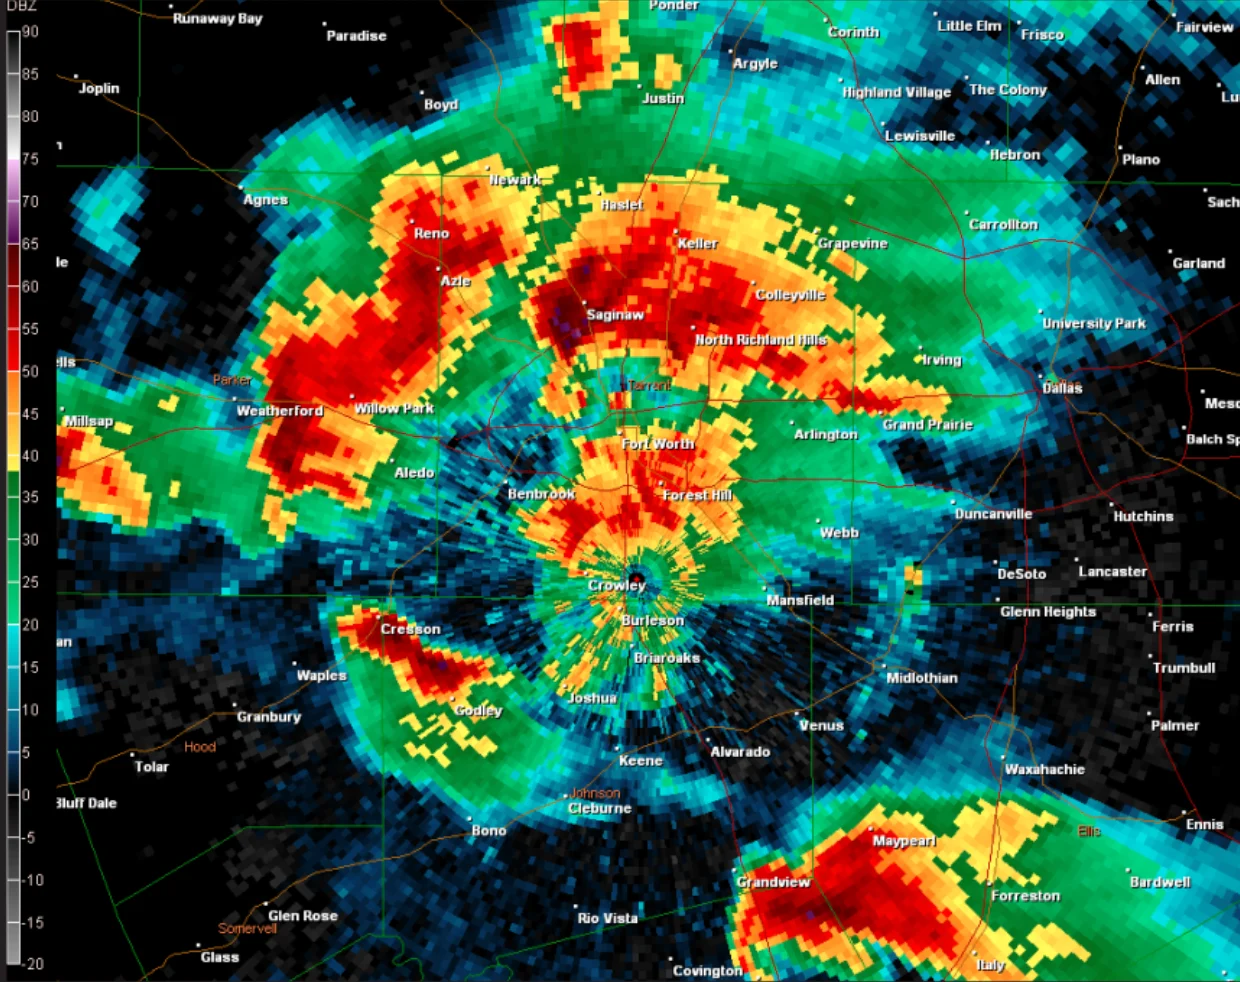 Radar reflectivity of the Fort Worth Tornado